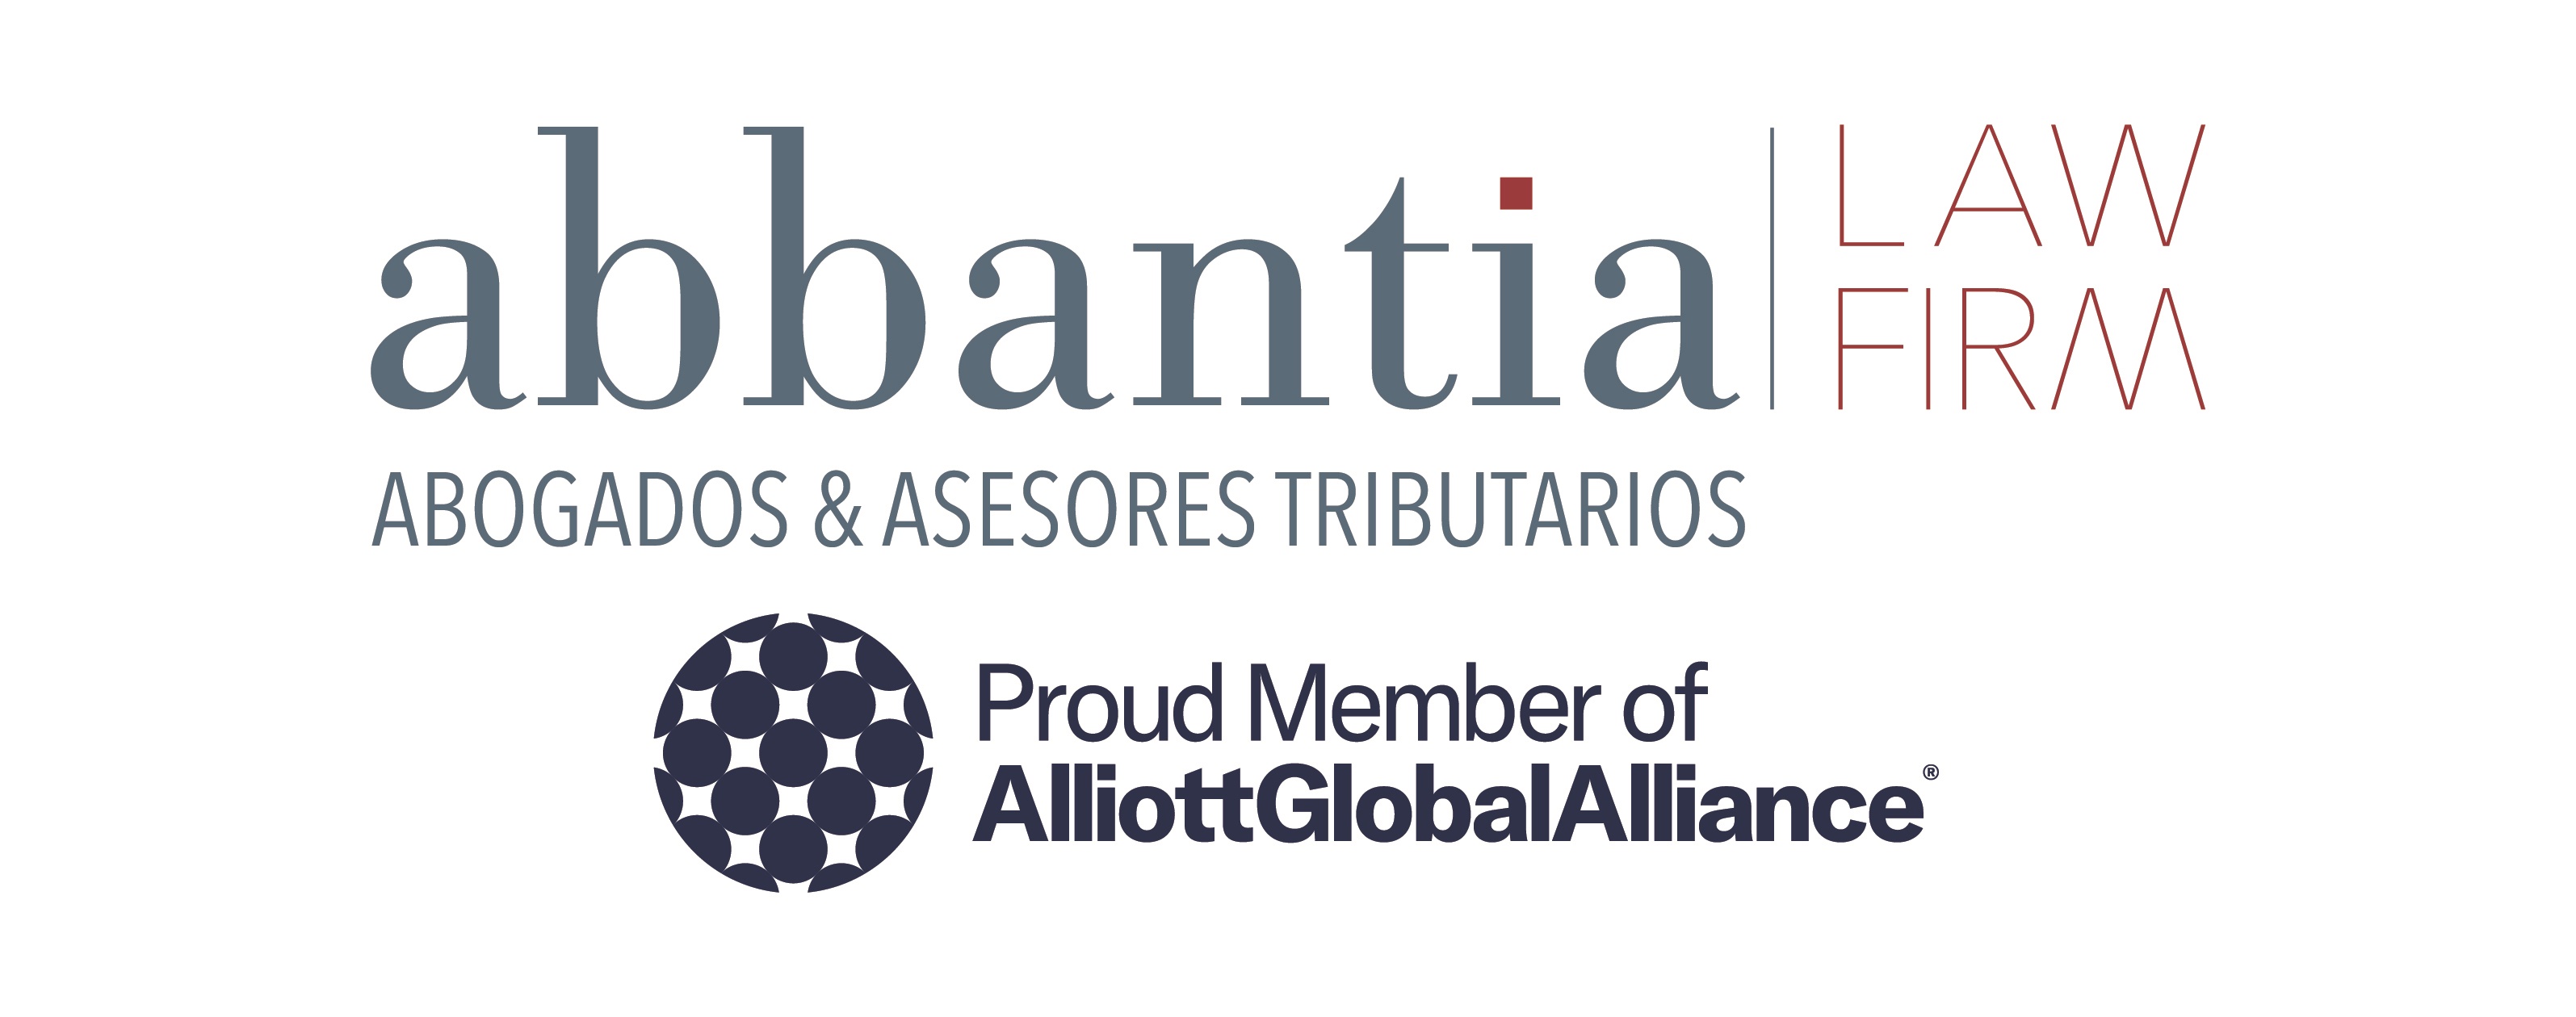 Logos Abbantia y Alliot largo horizontal jpg 01